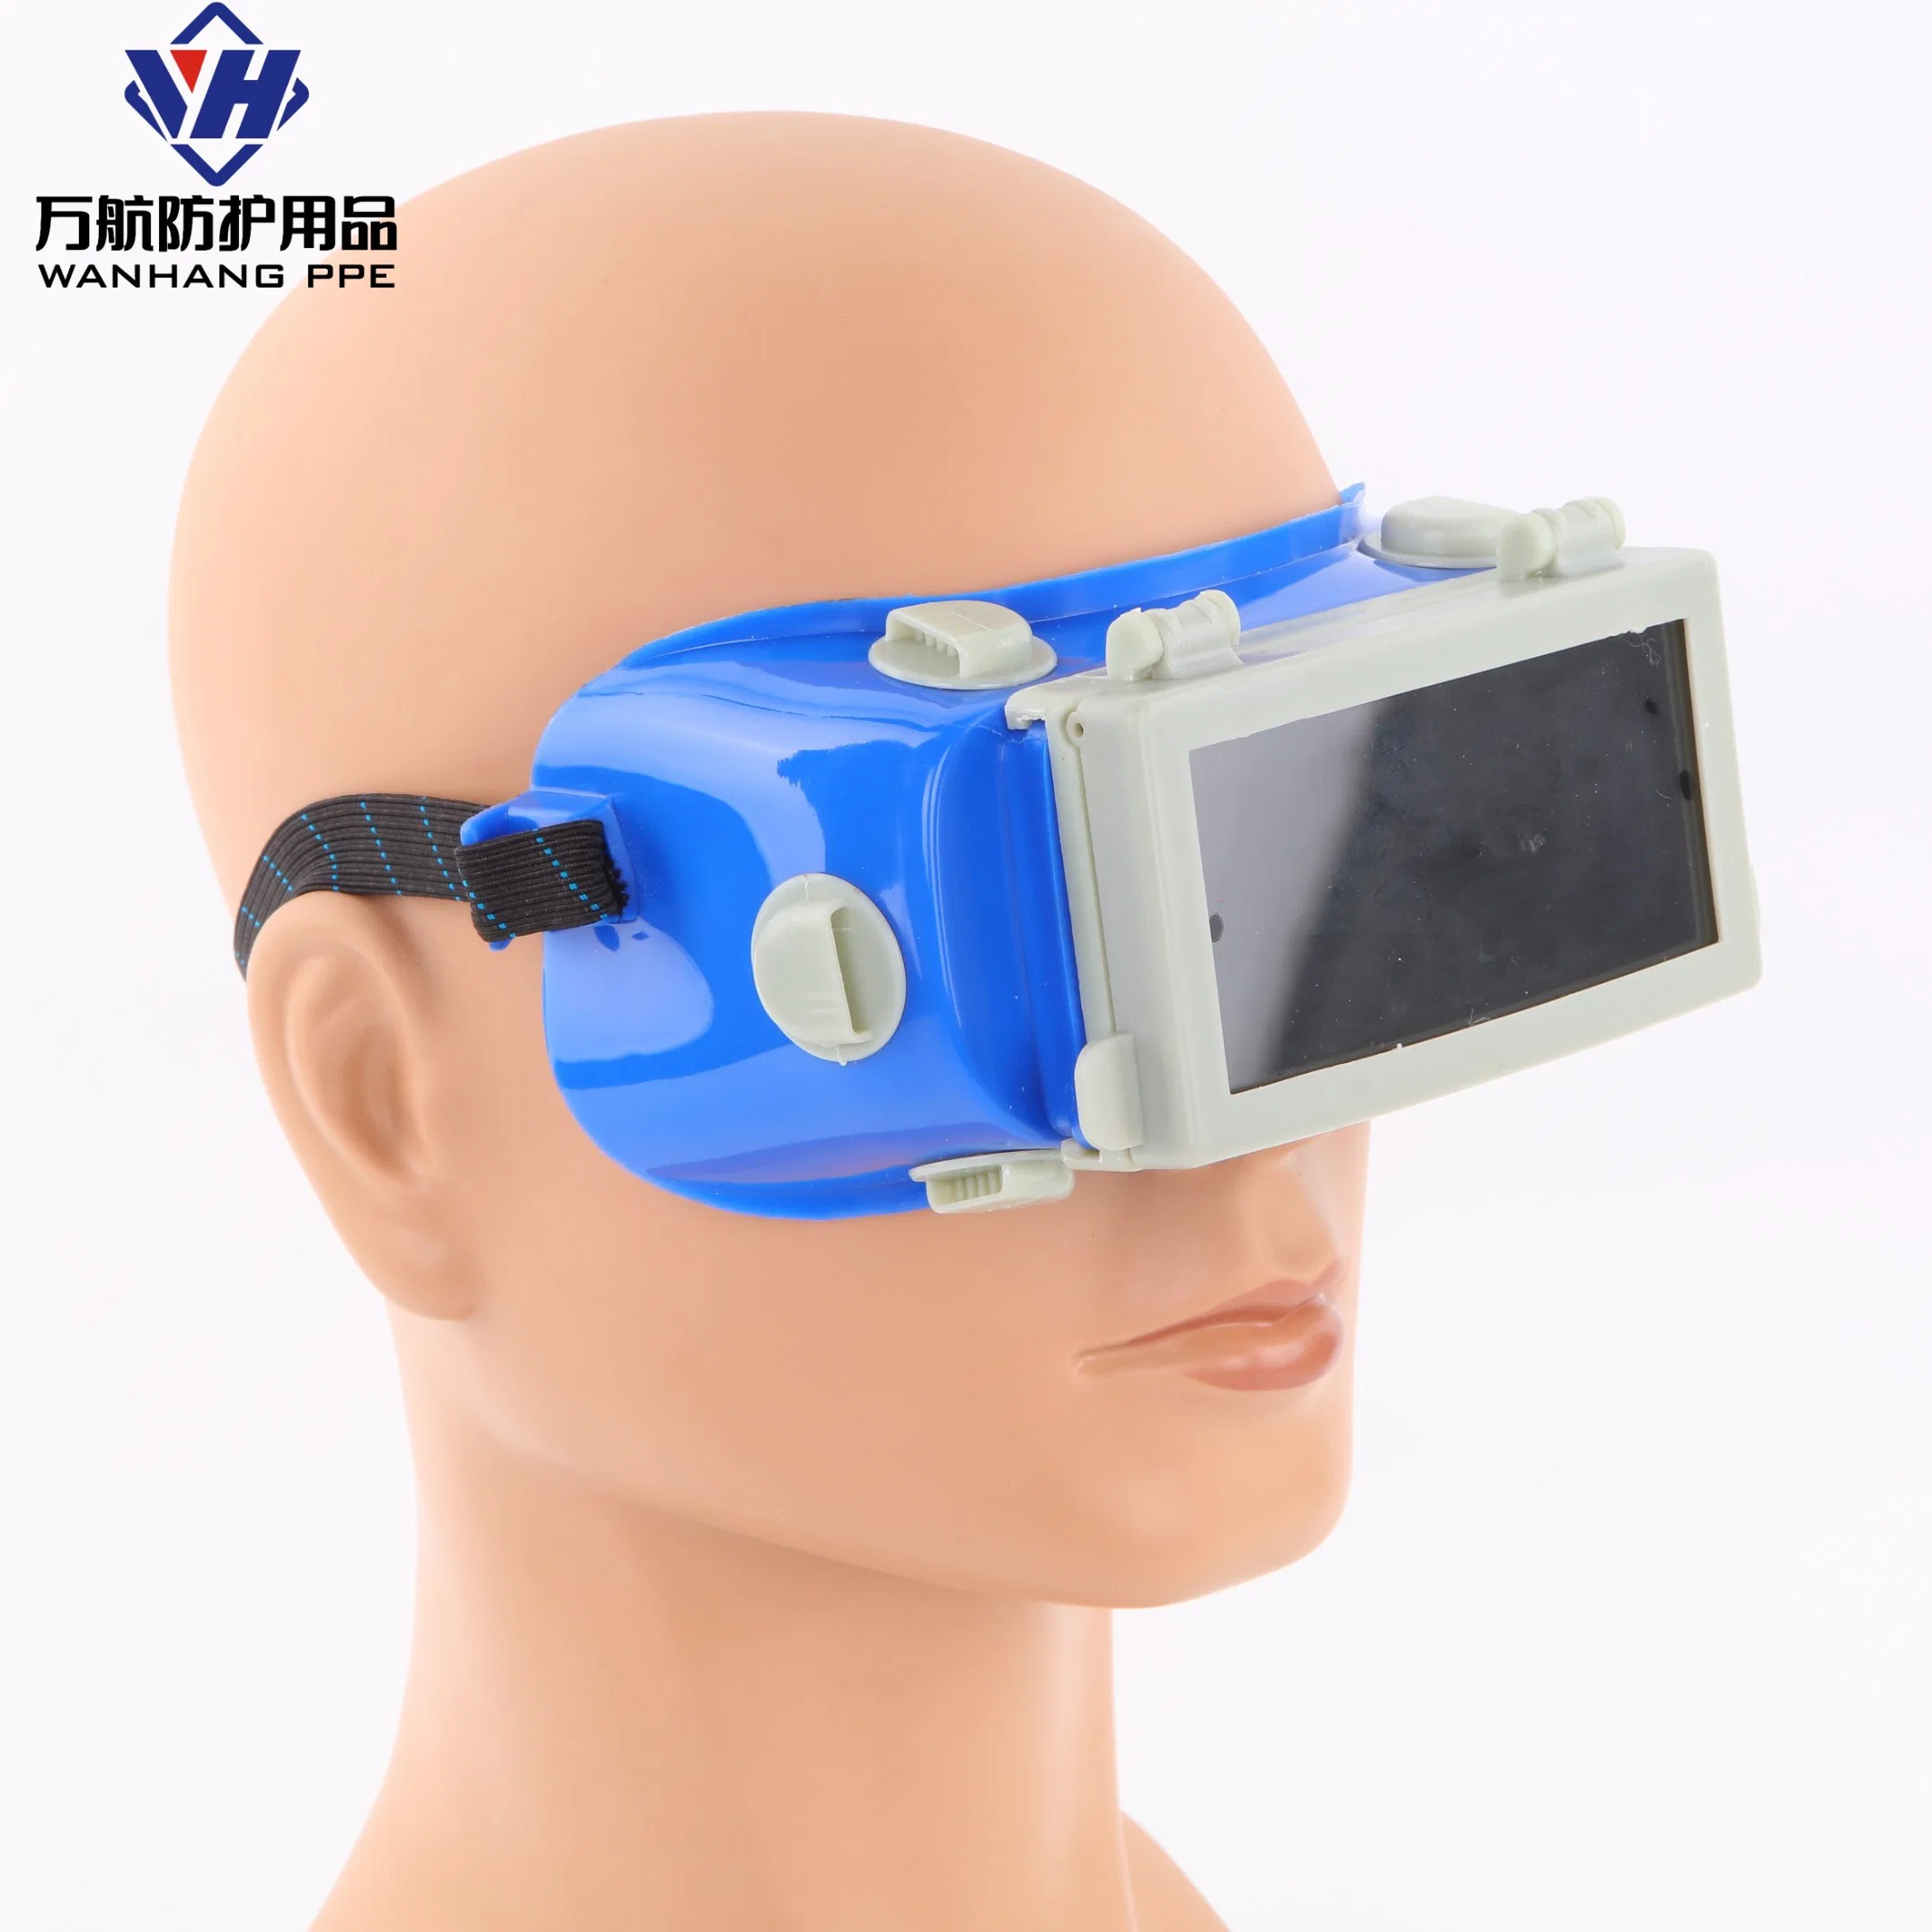 Auto Darkening Welding Helmet Eye Automatic Anti-Glare Electric Solar Darkening Mask Safety Welding Goggles Lens Glass Blue